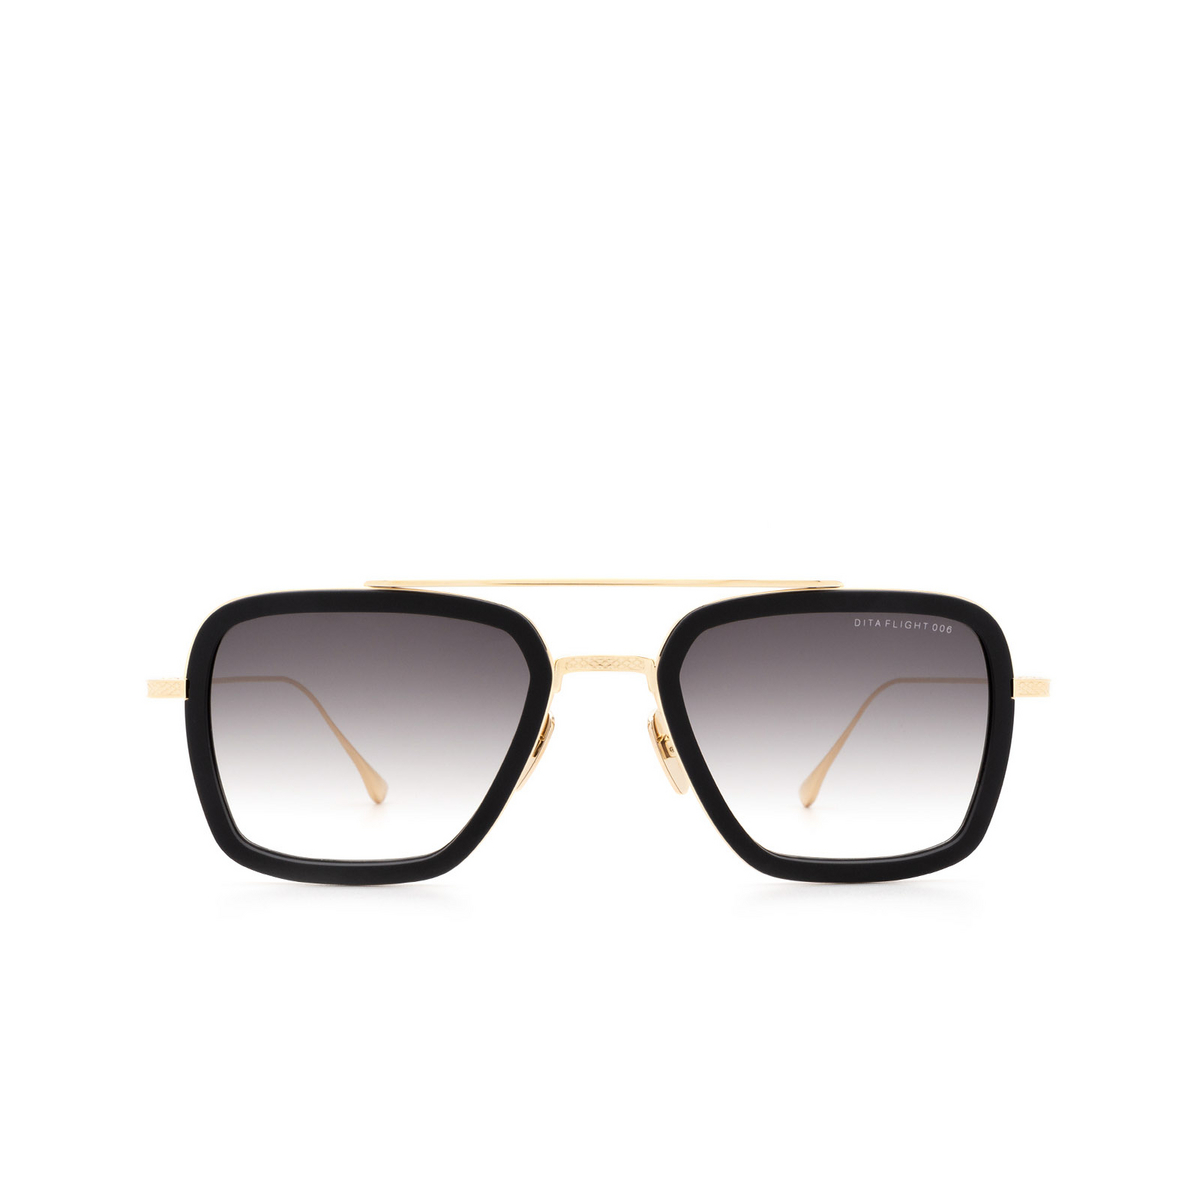 Dita® Aviator Sunglasses: Flight.006 7806-B color Black & Gold Blk-gld - front view.